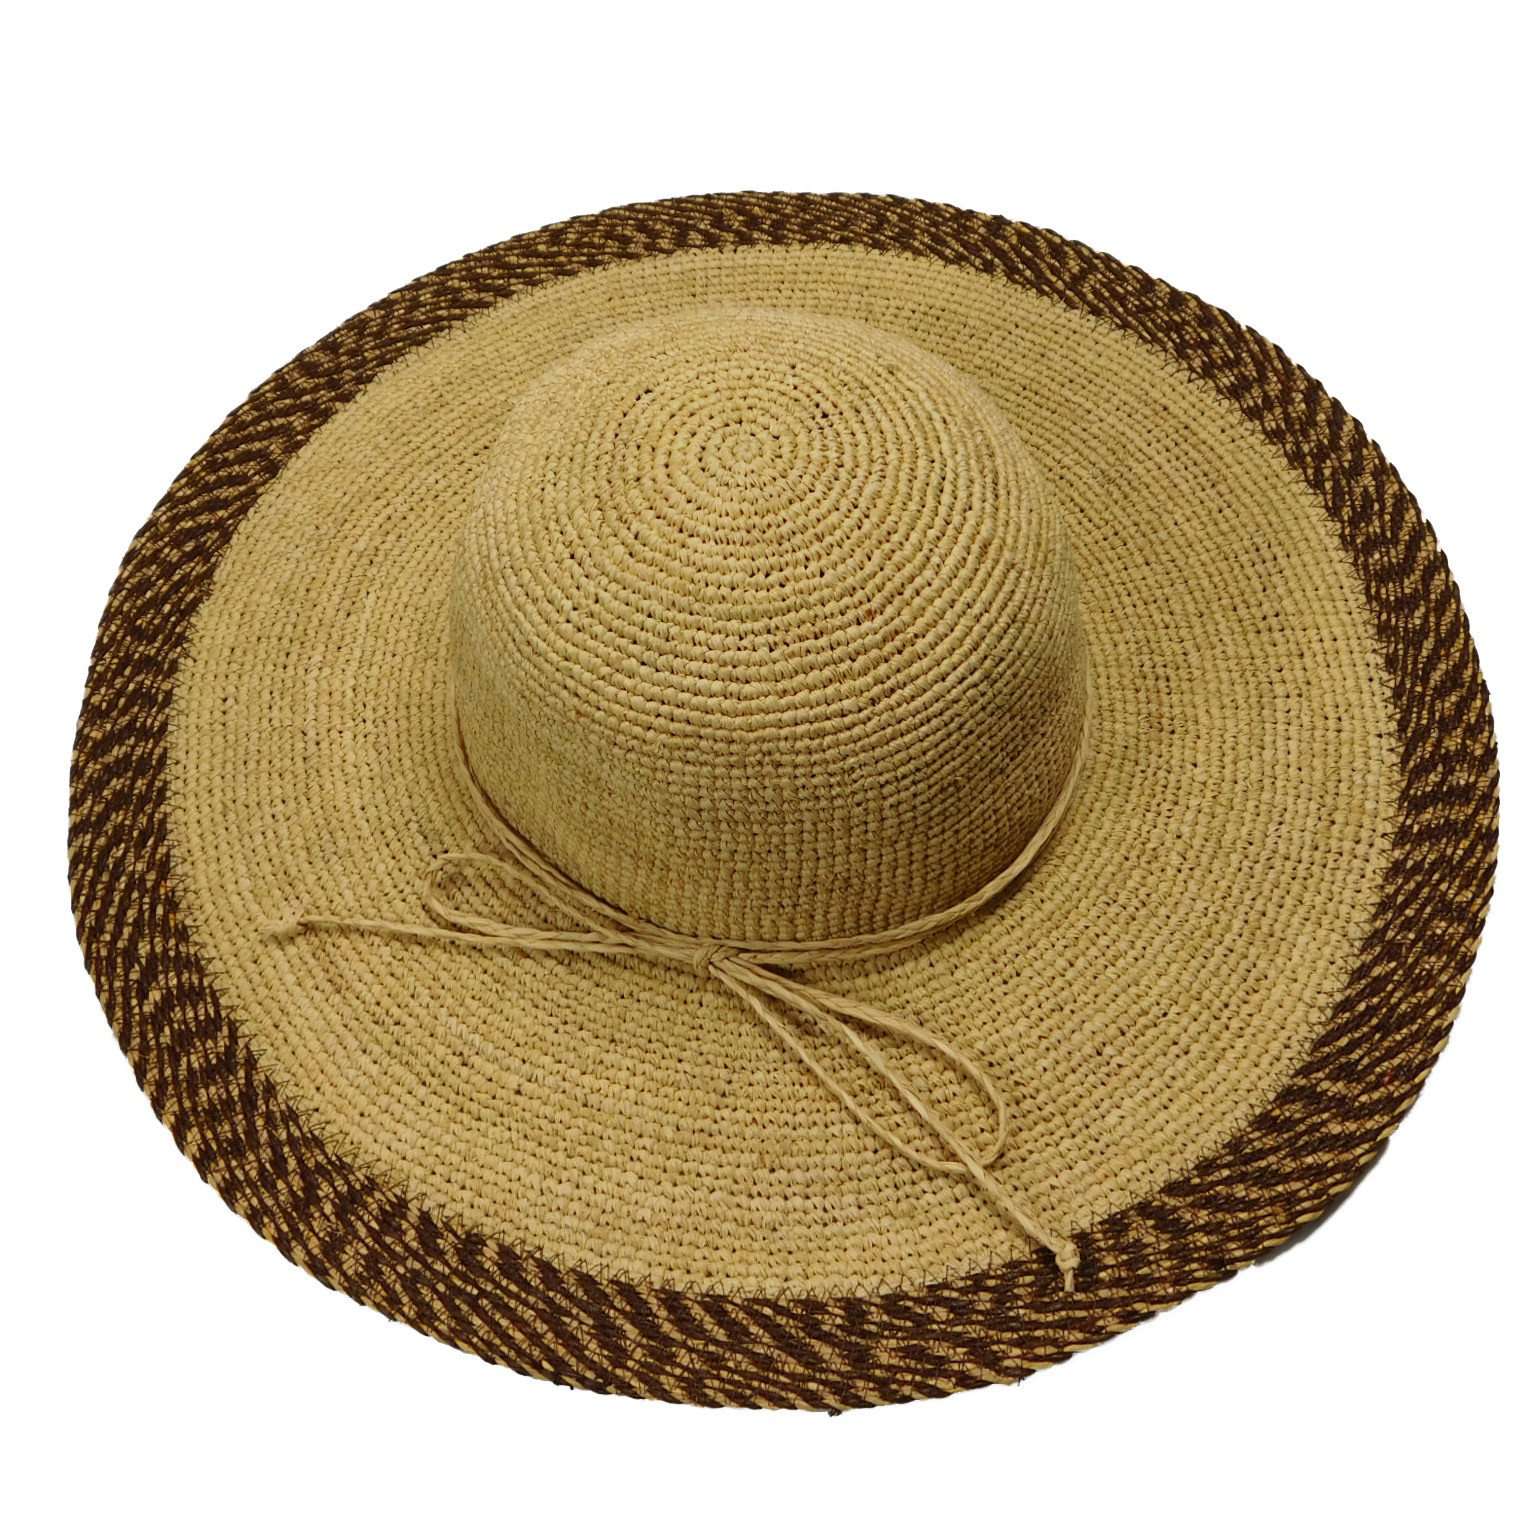 Two Tone Natural Raffia Beach Hat - Sophia Hat Collection Floppy Hat Something Special LA WSRA483BN Brown Medium (57 cm) 